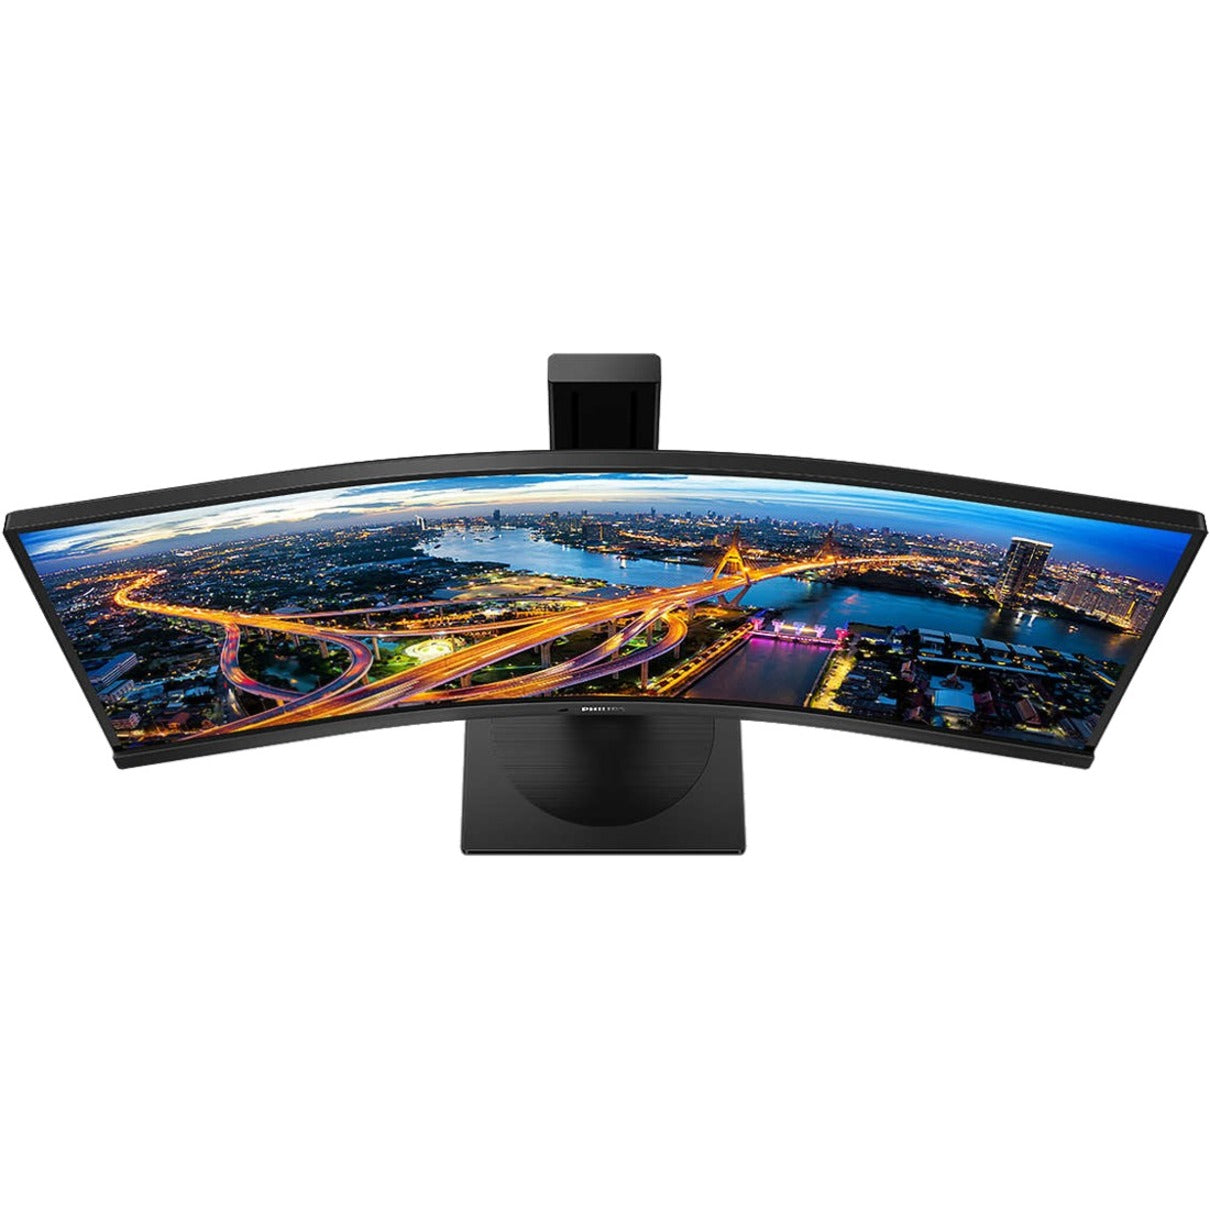 Philips 346B1C Curved UltraWide LCD Monitor with USB-C, 34" 3440 x 1440, 100Hz, 300 Nit, 119% sRGB, 90% Adobe RGB, 100% NTSC, 16.7 Million Colors